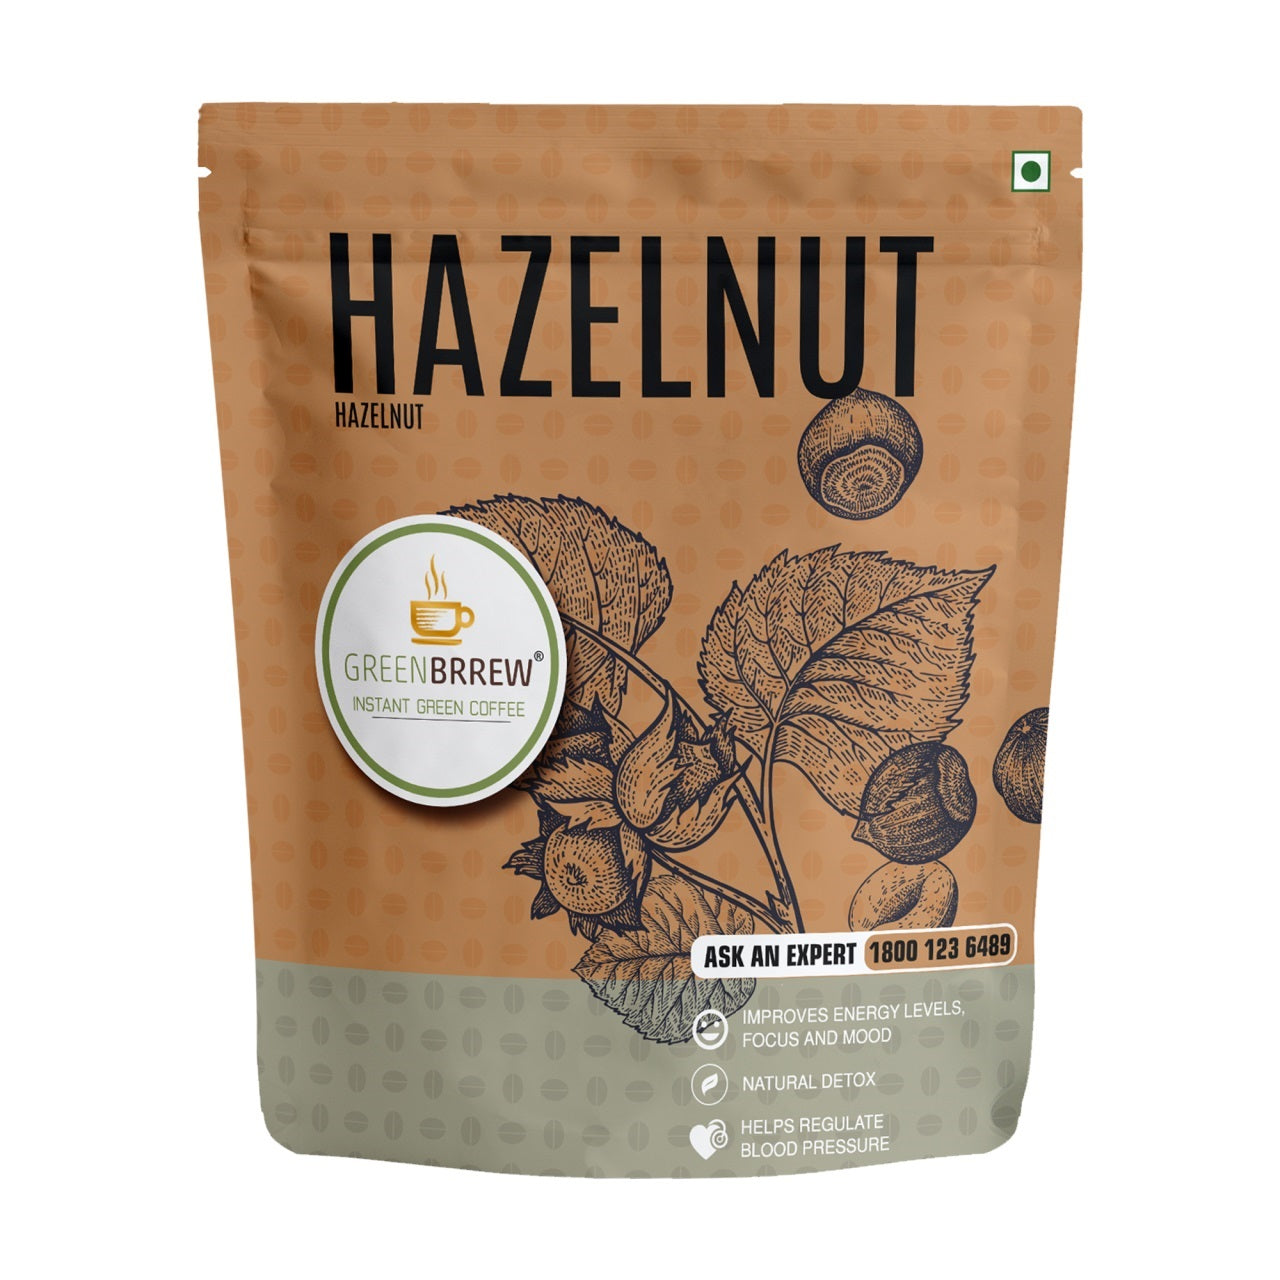 Hazelnut Instant Green Coffee - Front Image